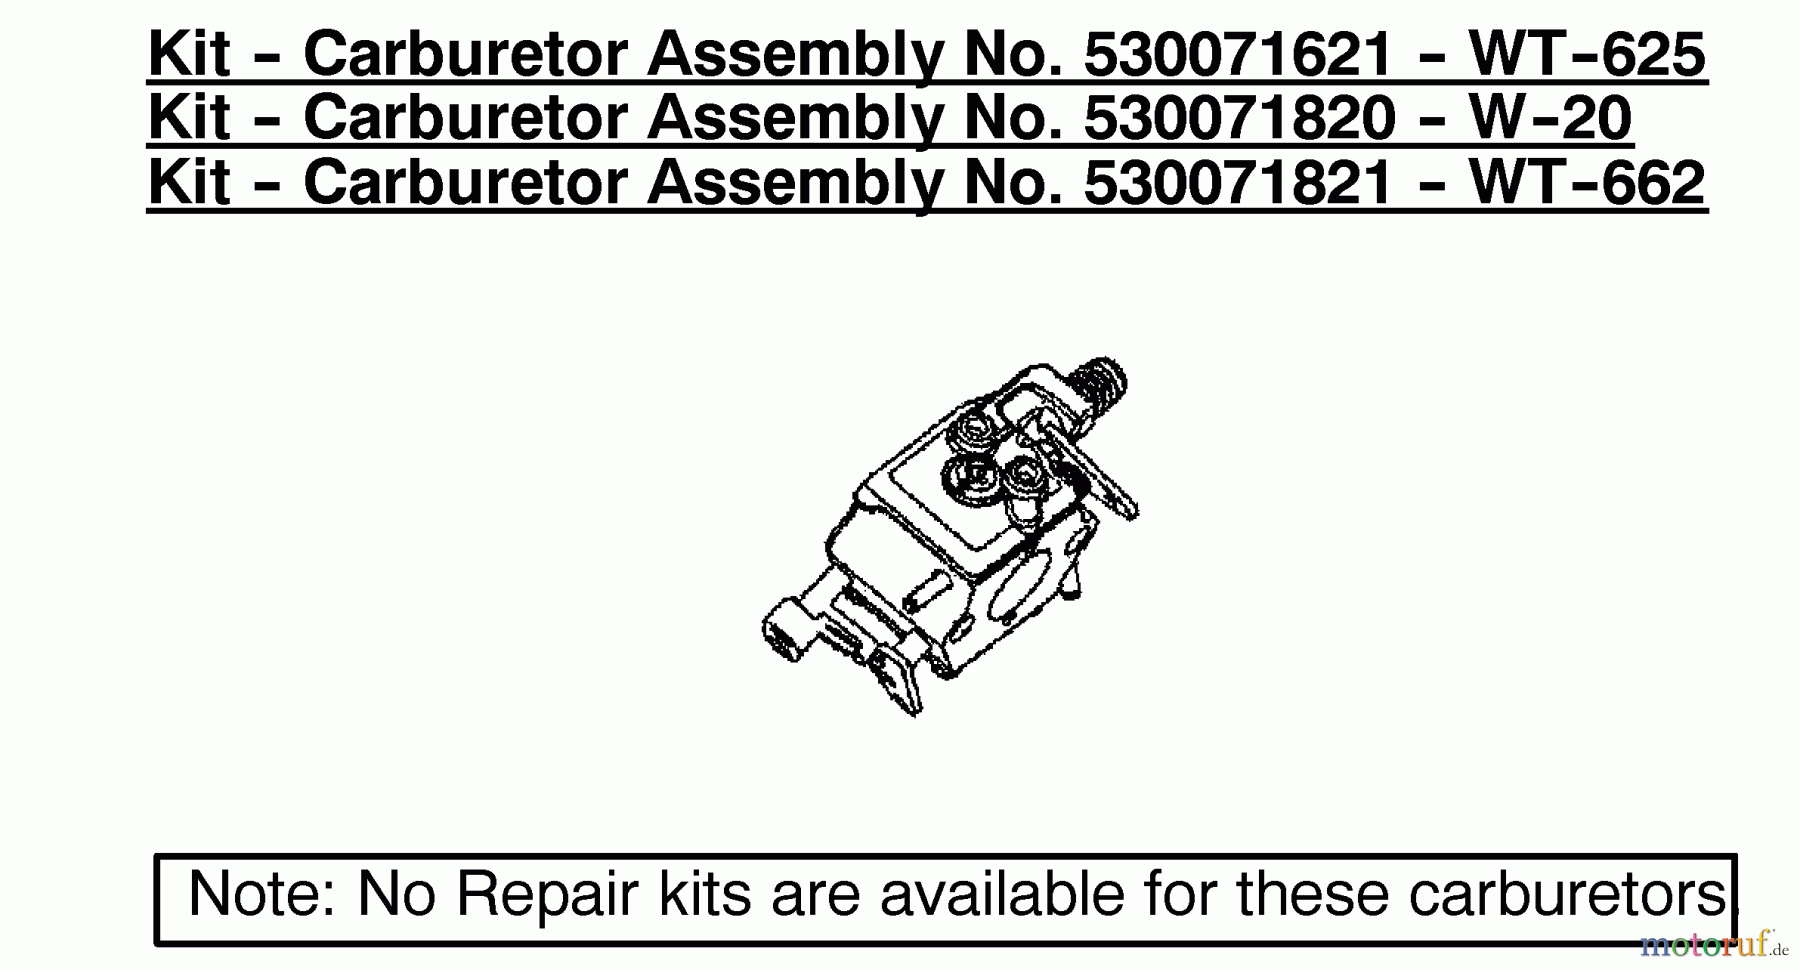  Poulan / Weed Eater Motorsägen 2450 (Type 6) - Poulan Woodmaster Chainsaw Kit - Carburetor Assembly 530071621/530071820/530071821